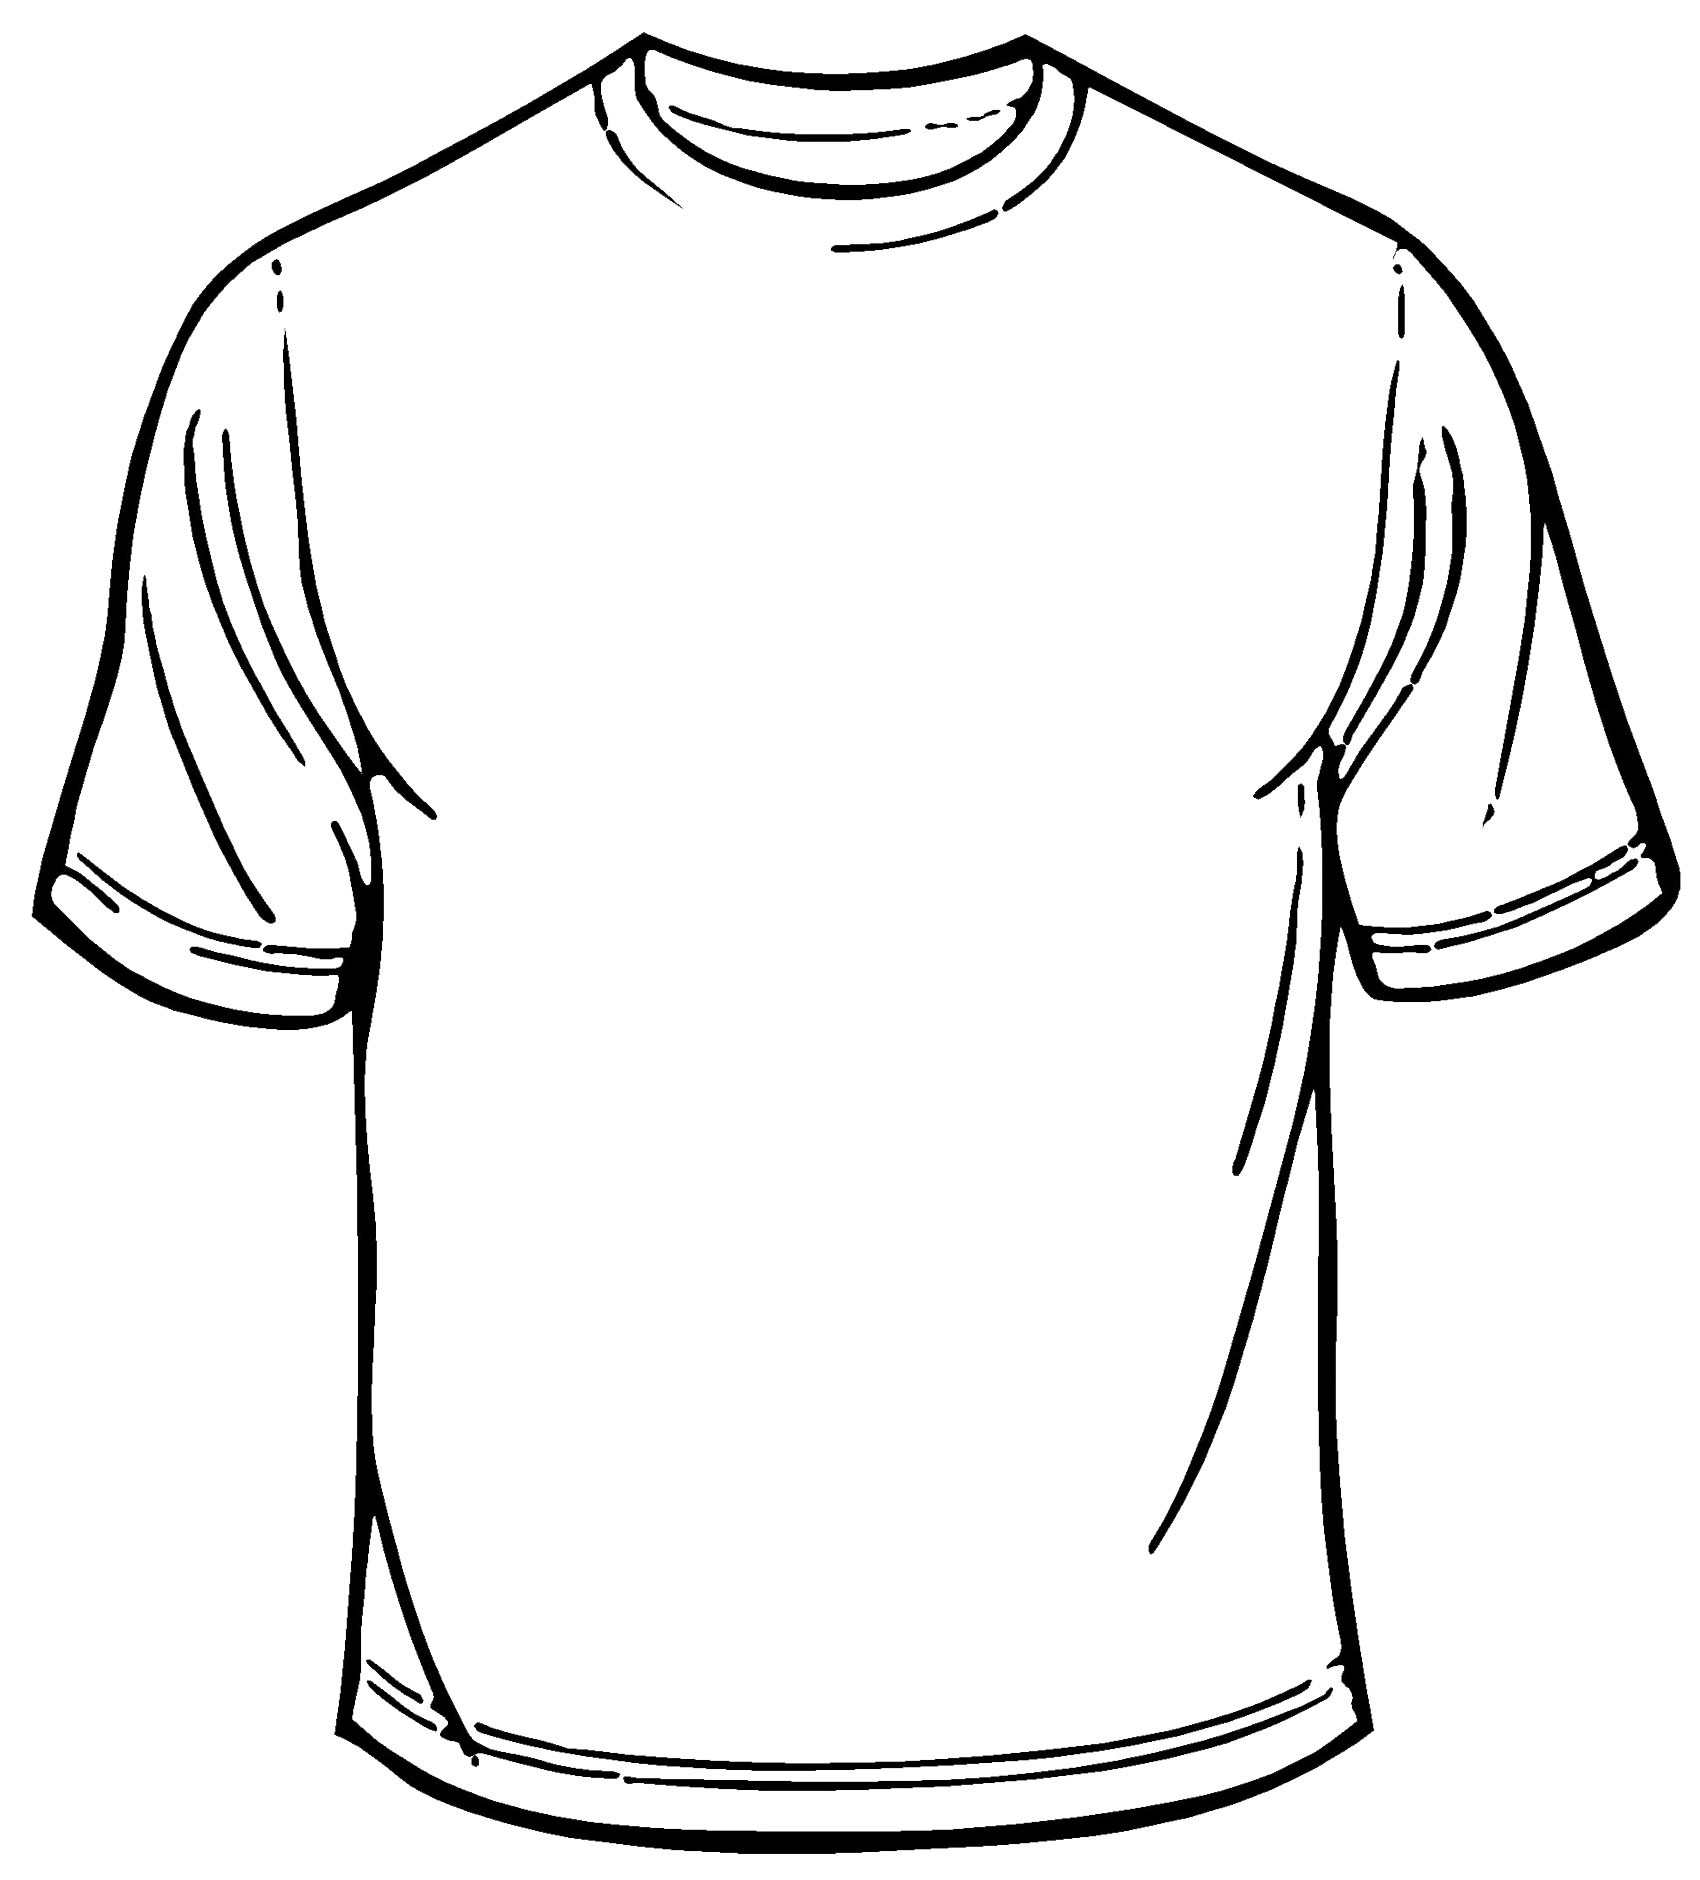 Plain Shirt Coloring Sheets For Girls
 Blank T Shirt Template